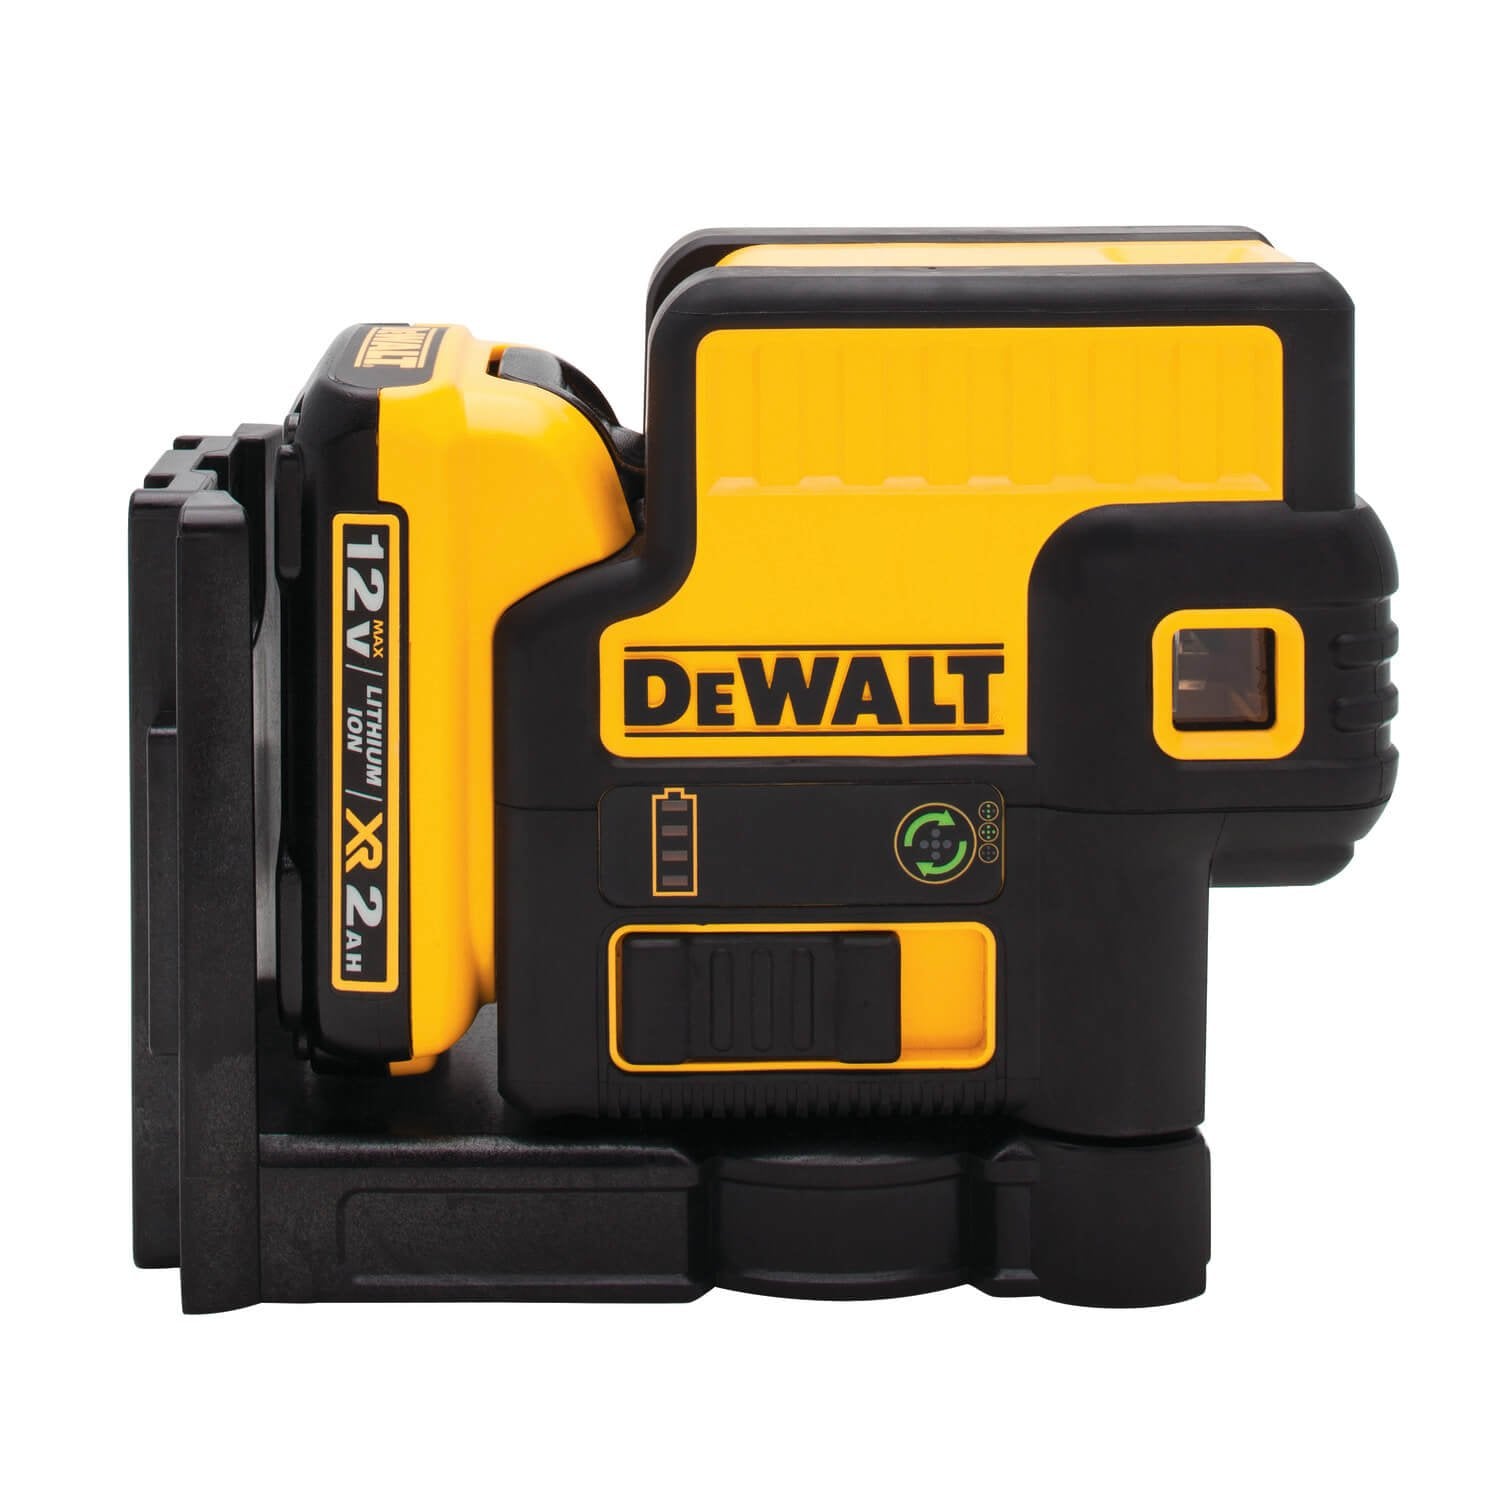 DEWALT DW085LG 12V Beam Battery, Green